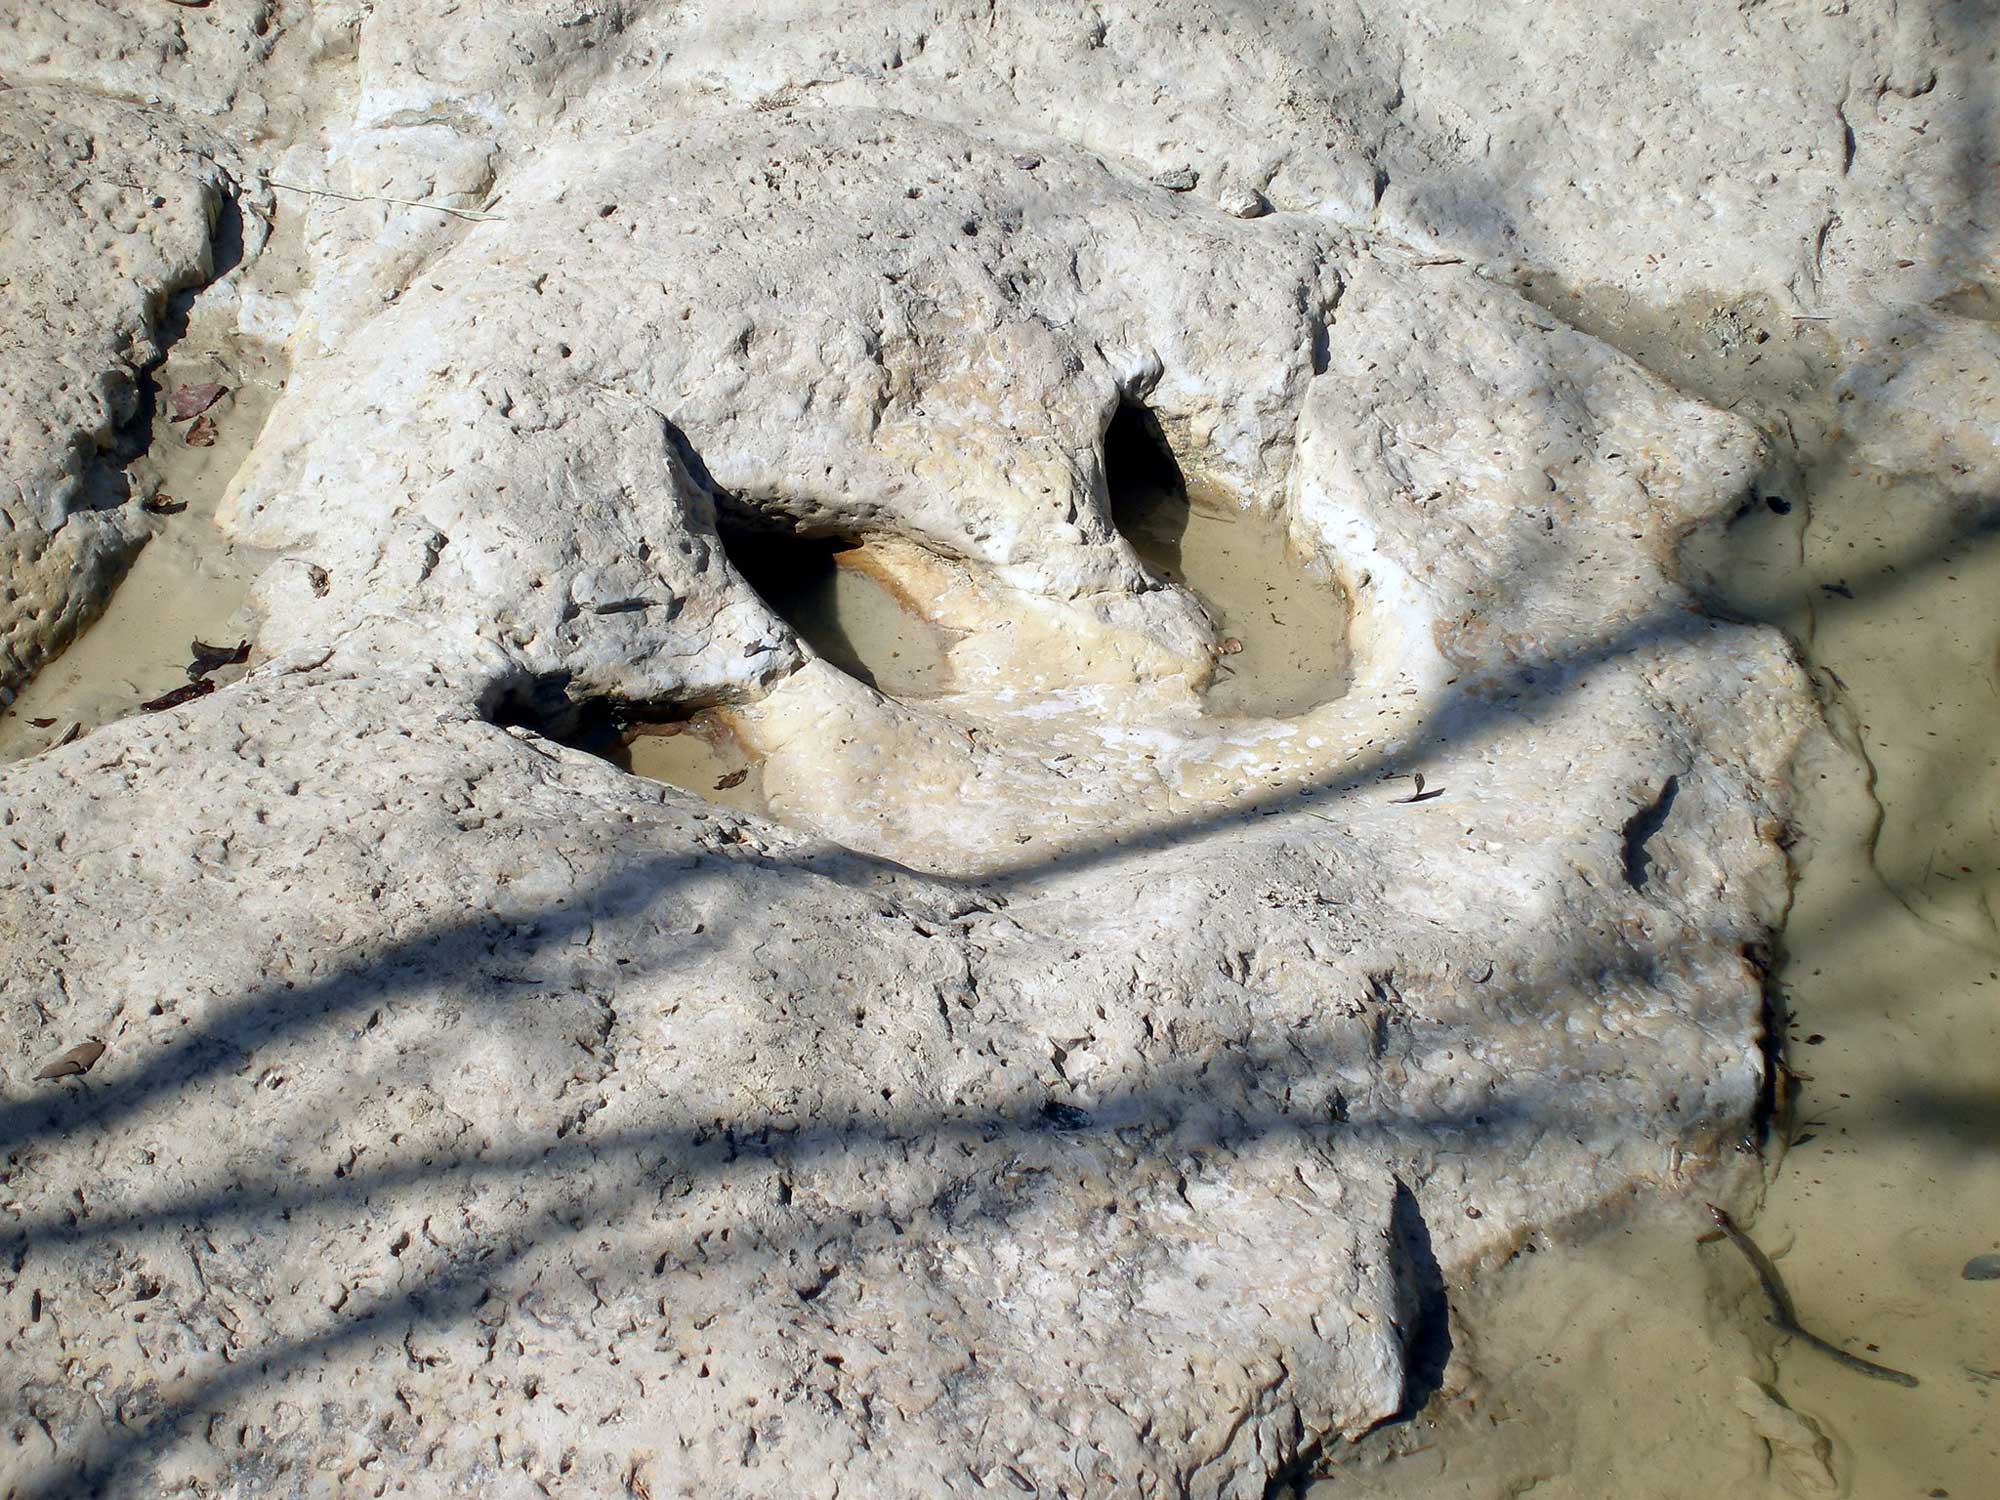 Photograph of a dinosaur footprint at Dinosaur Valley State Park, Texas.